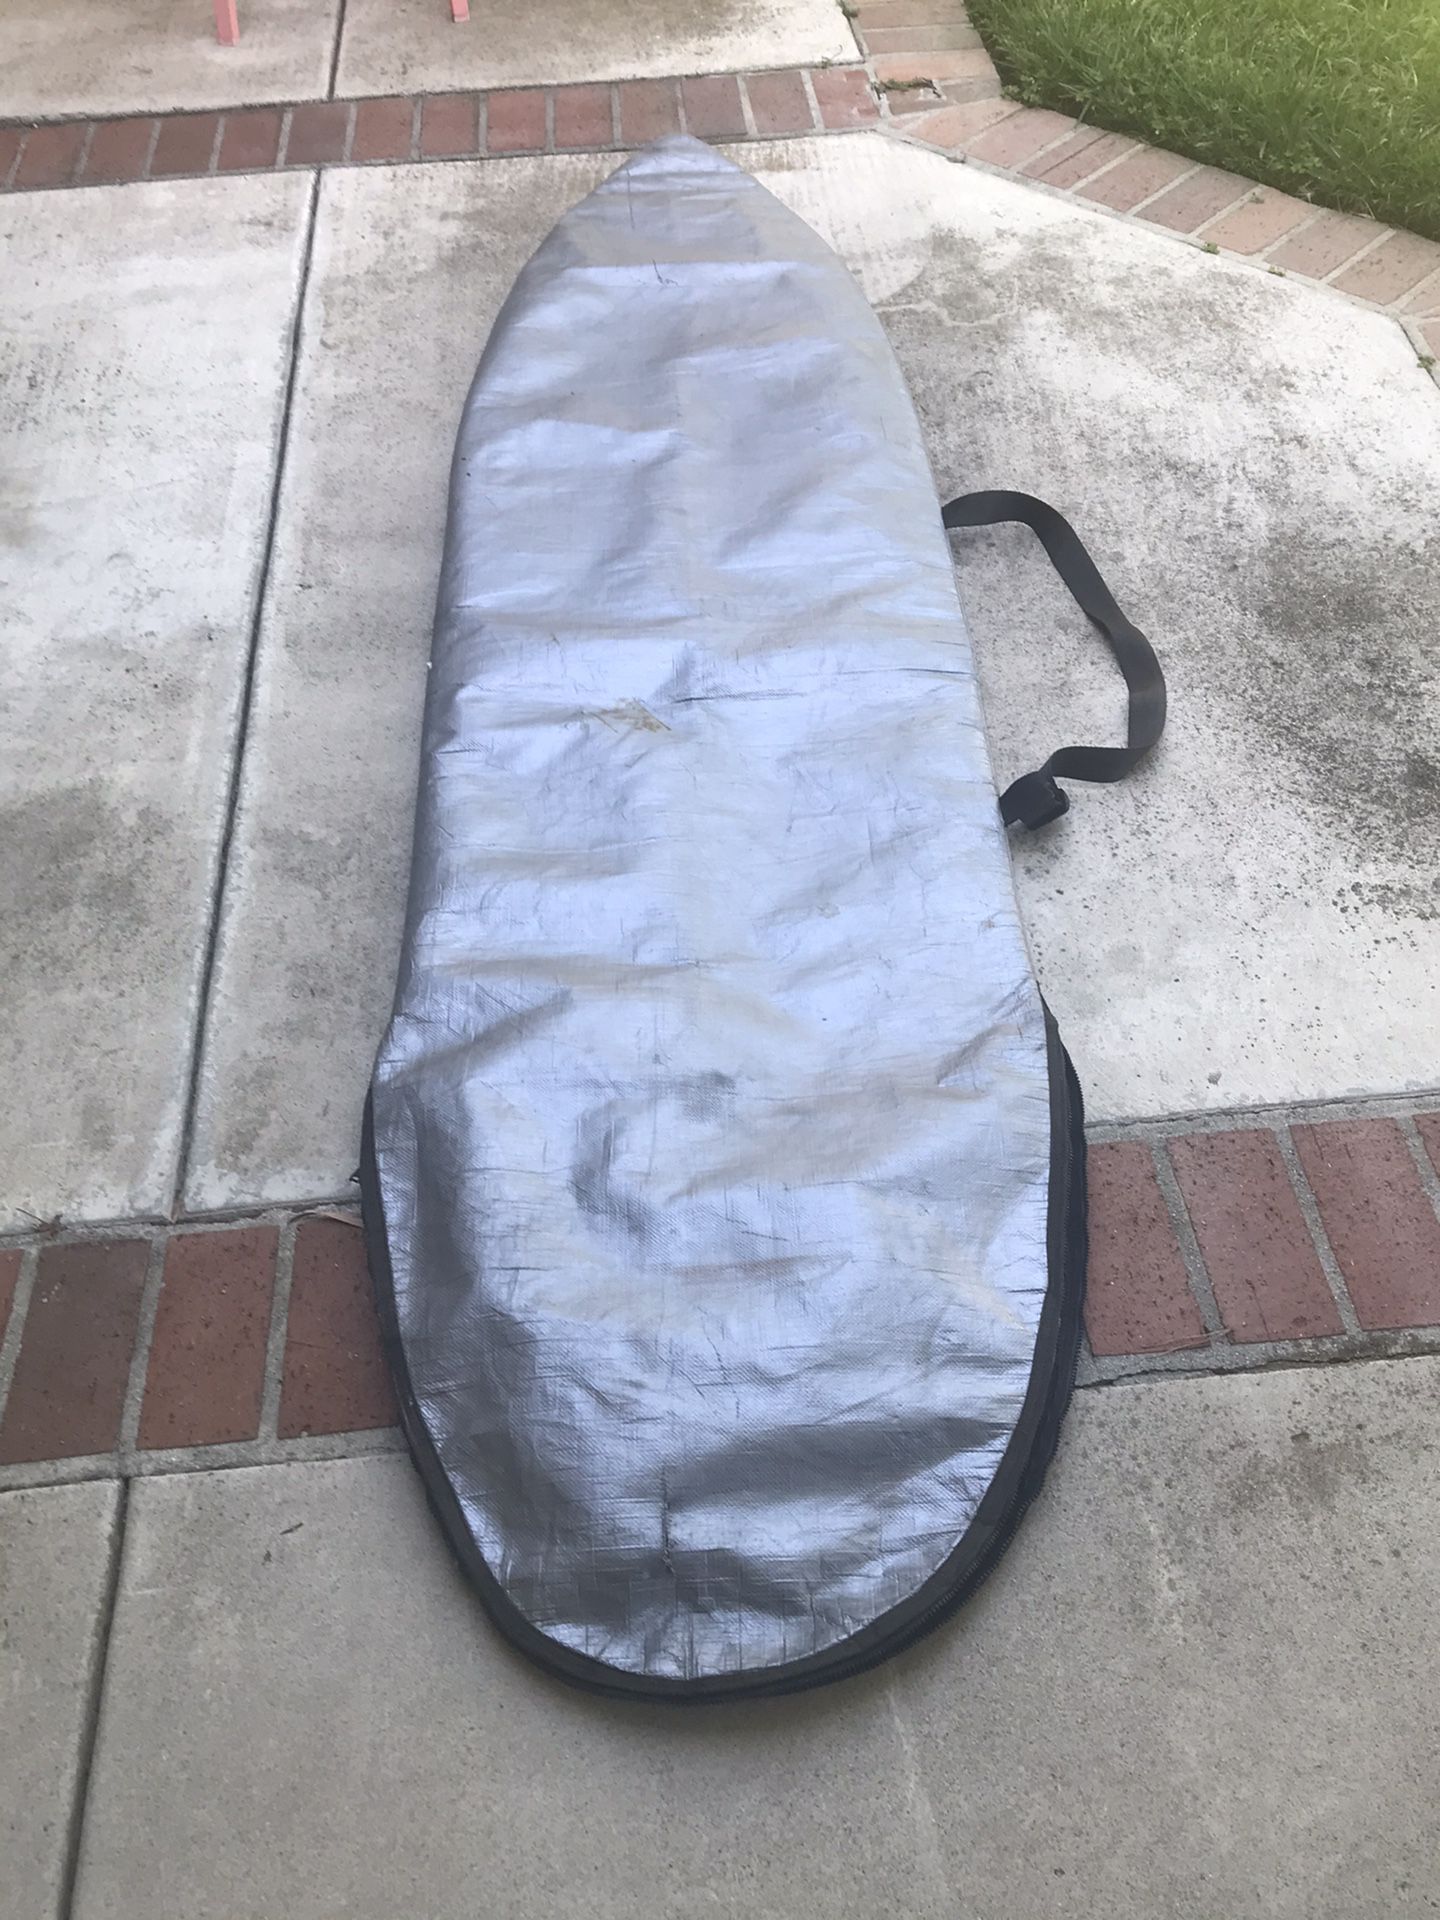 7’6” Day Board bag - zipper works perfect